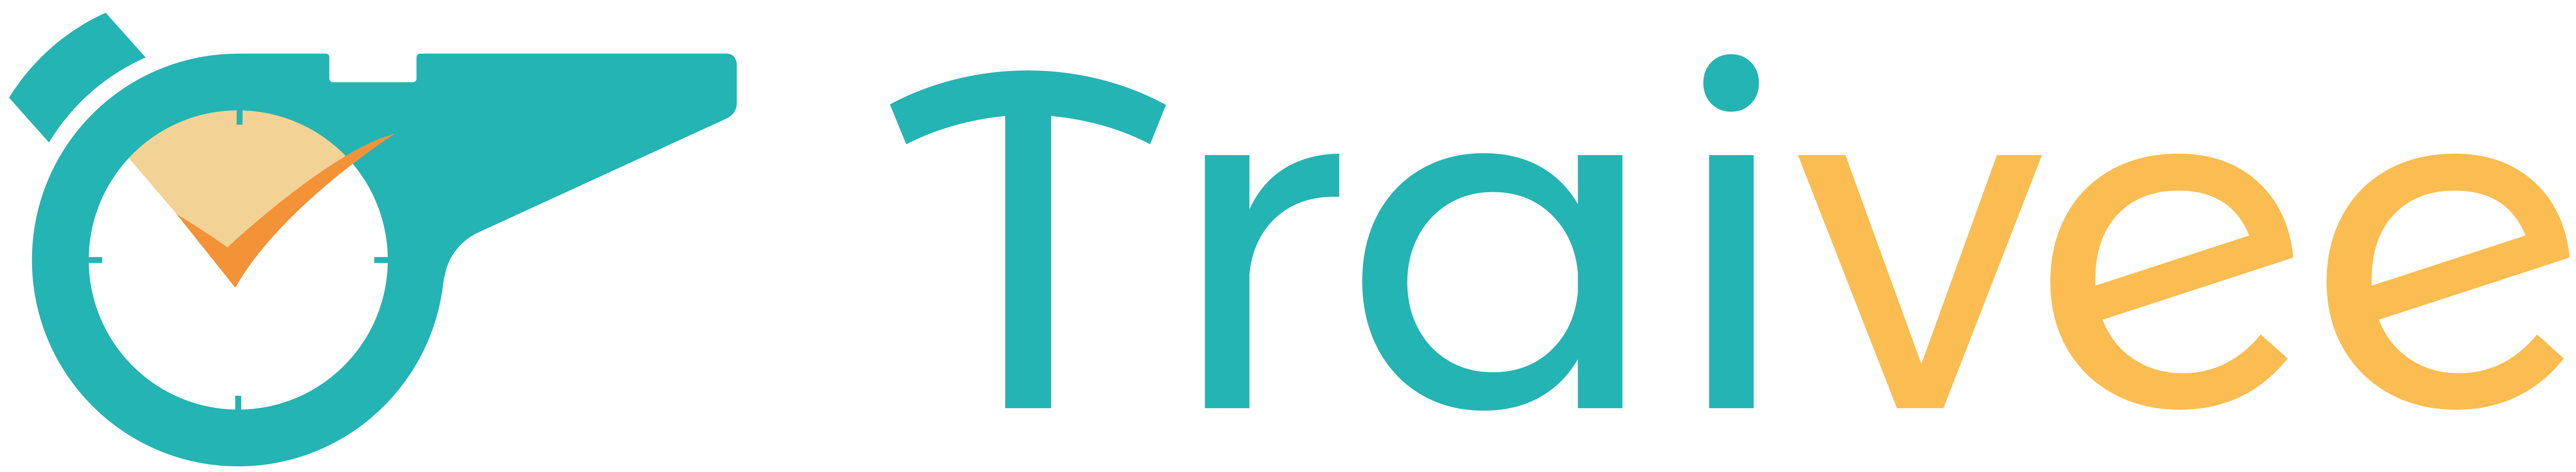 Logotipo Traivee